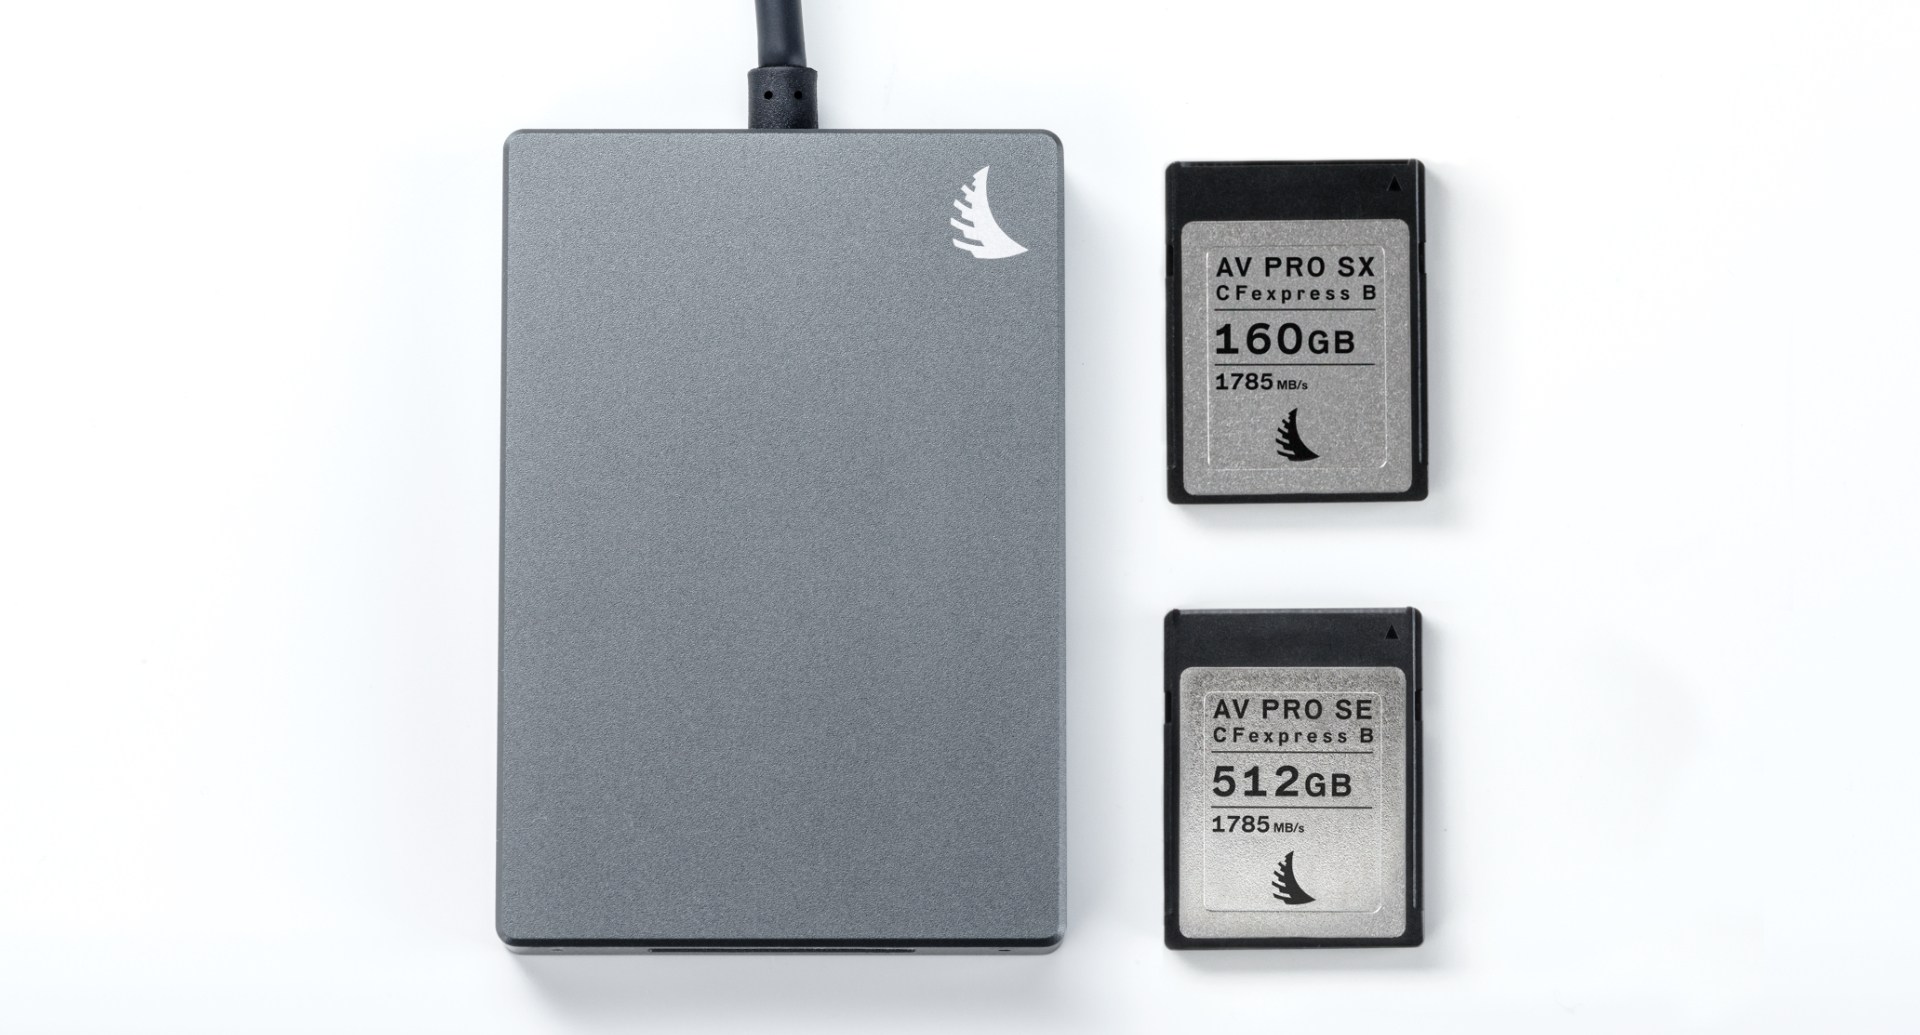 AngelbirdがAV PRO SEとSX CFexpress Type Bカードを発売 | CineD